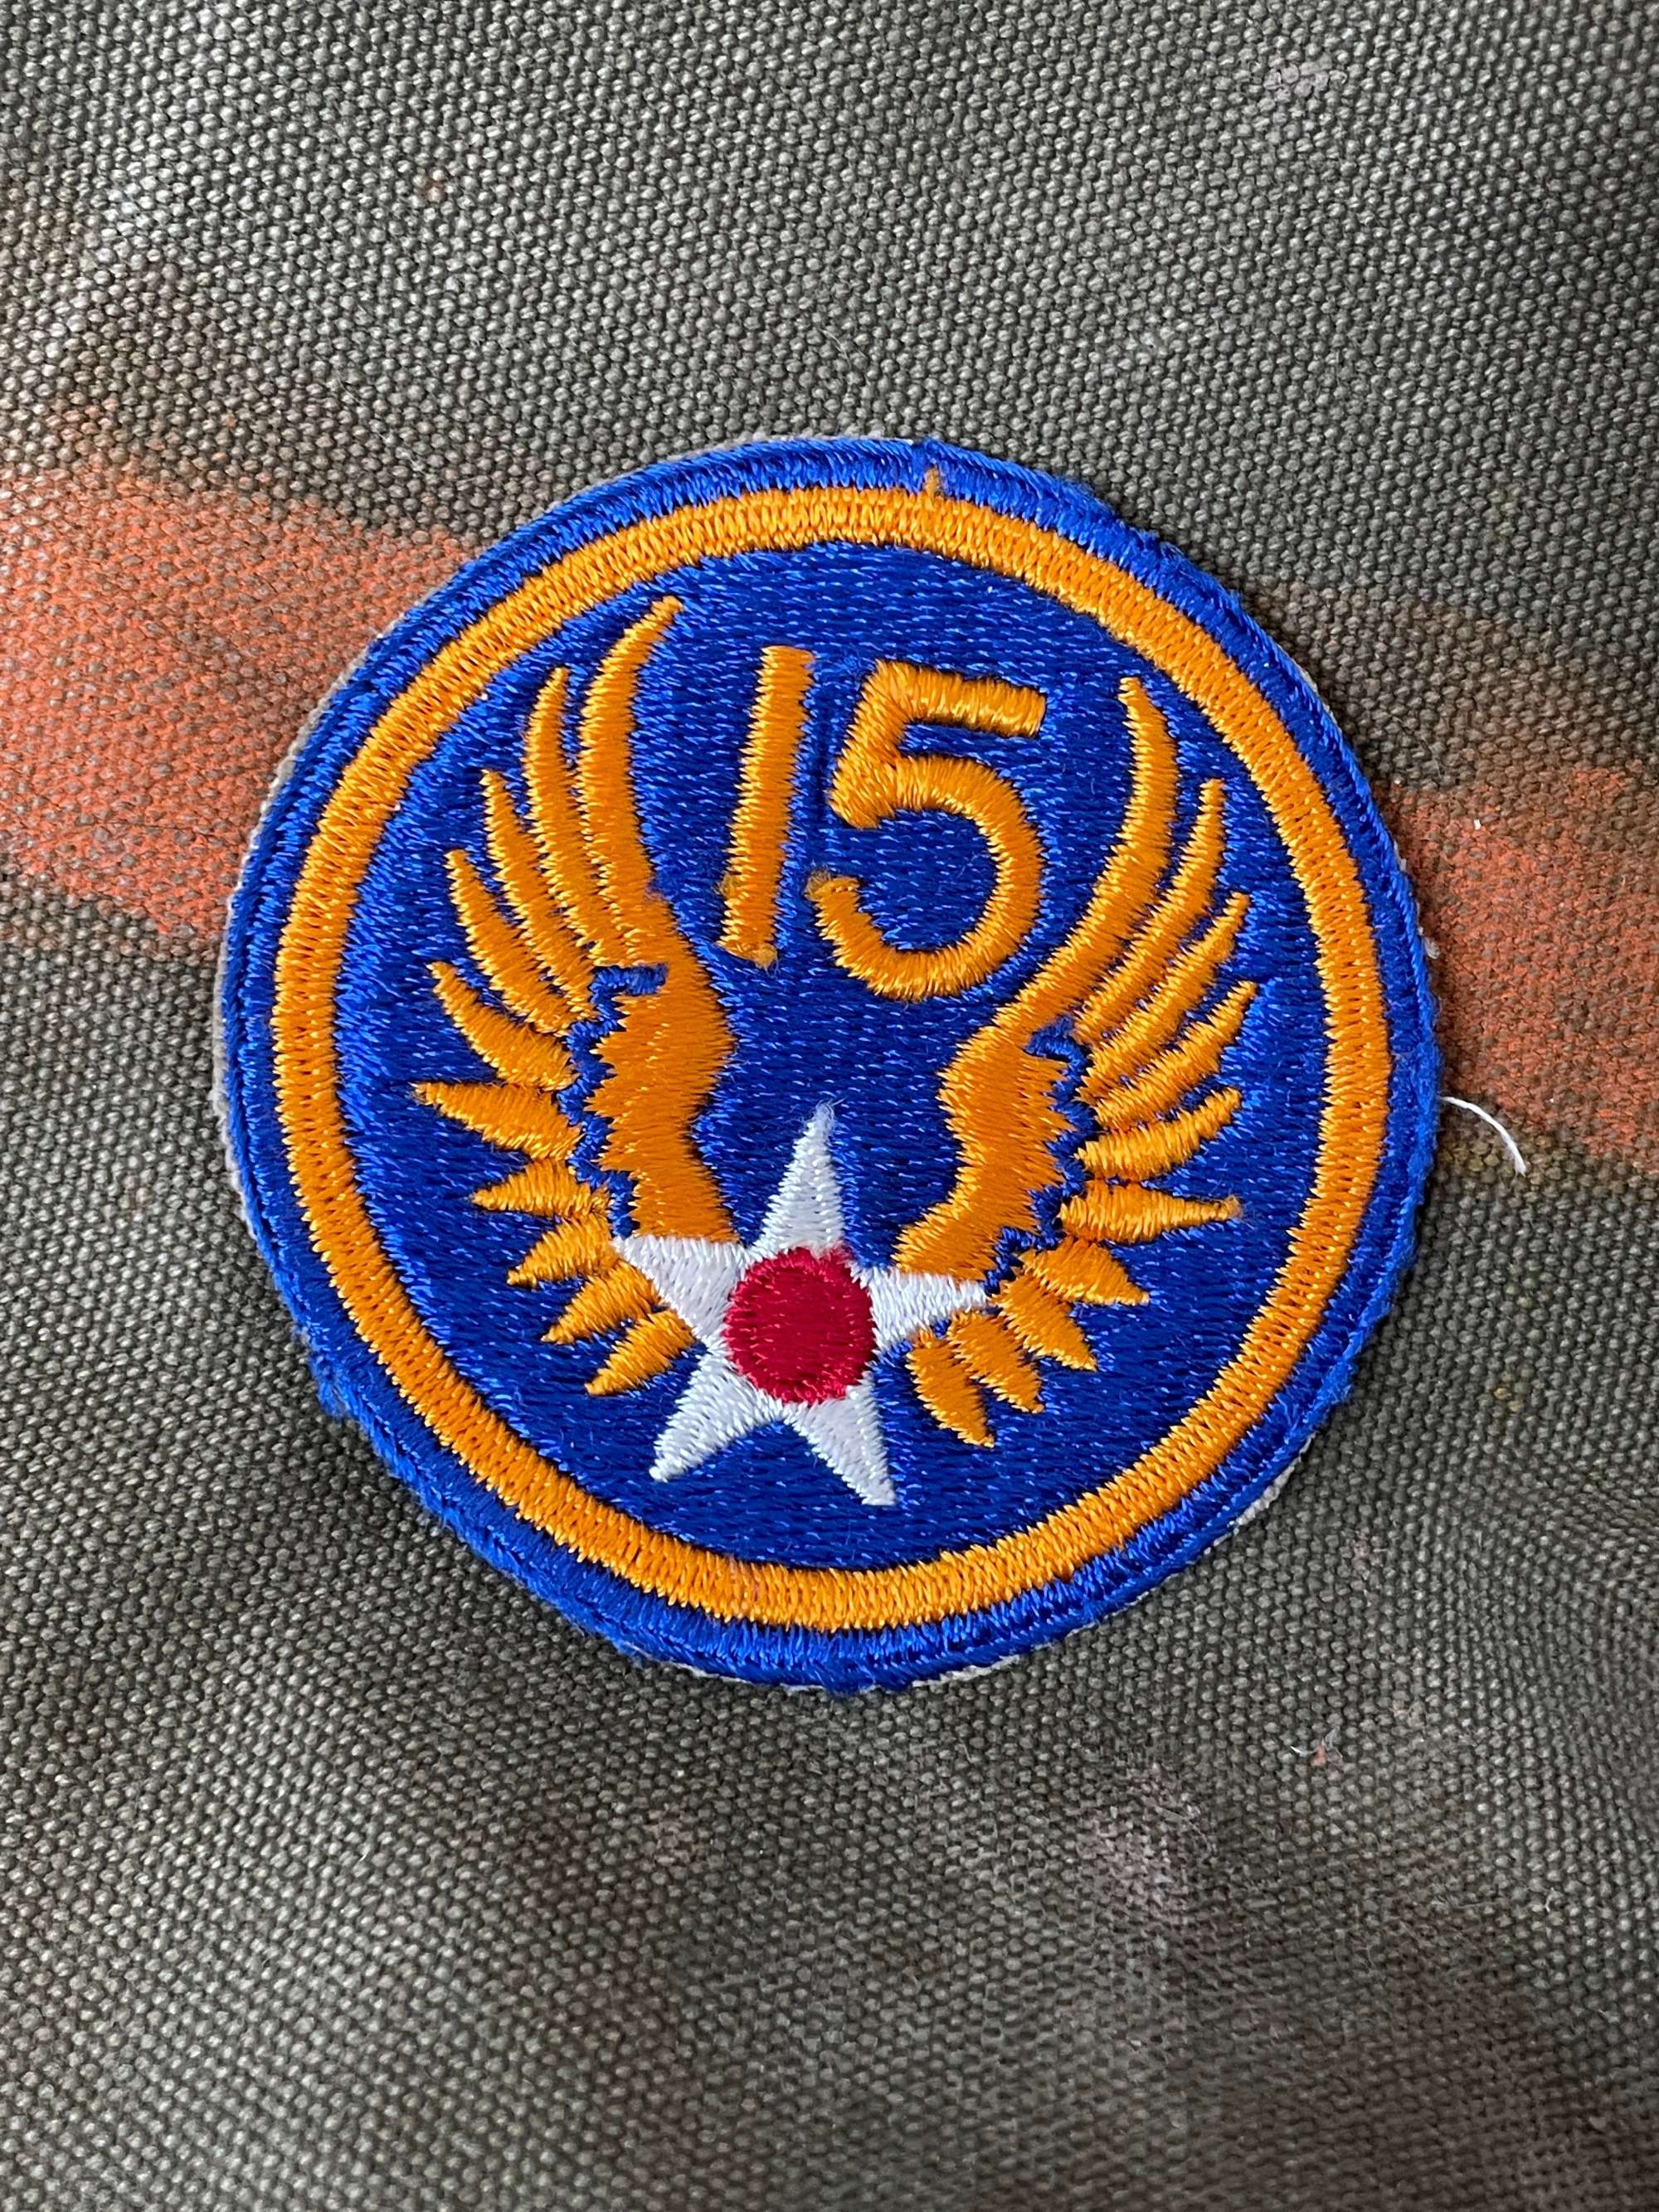 Original World War Two Era American 15th Army Air Force Patch